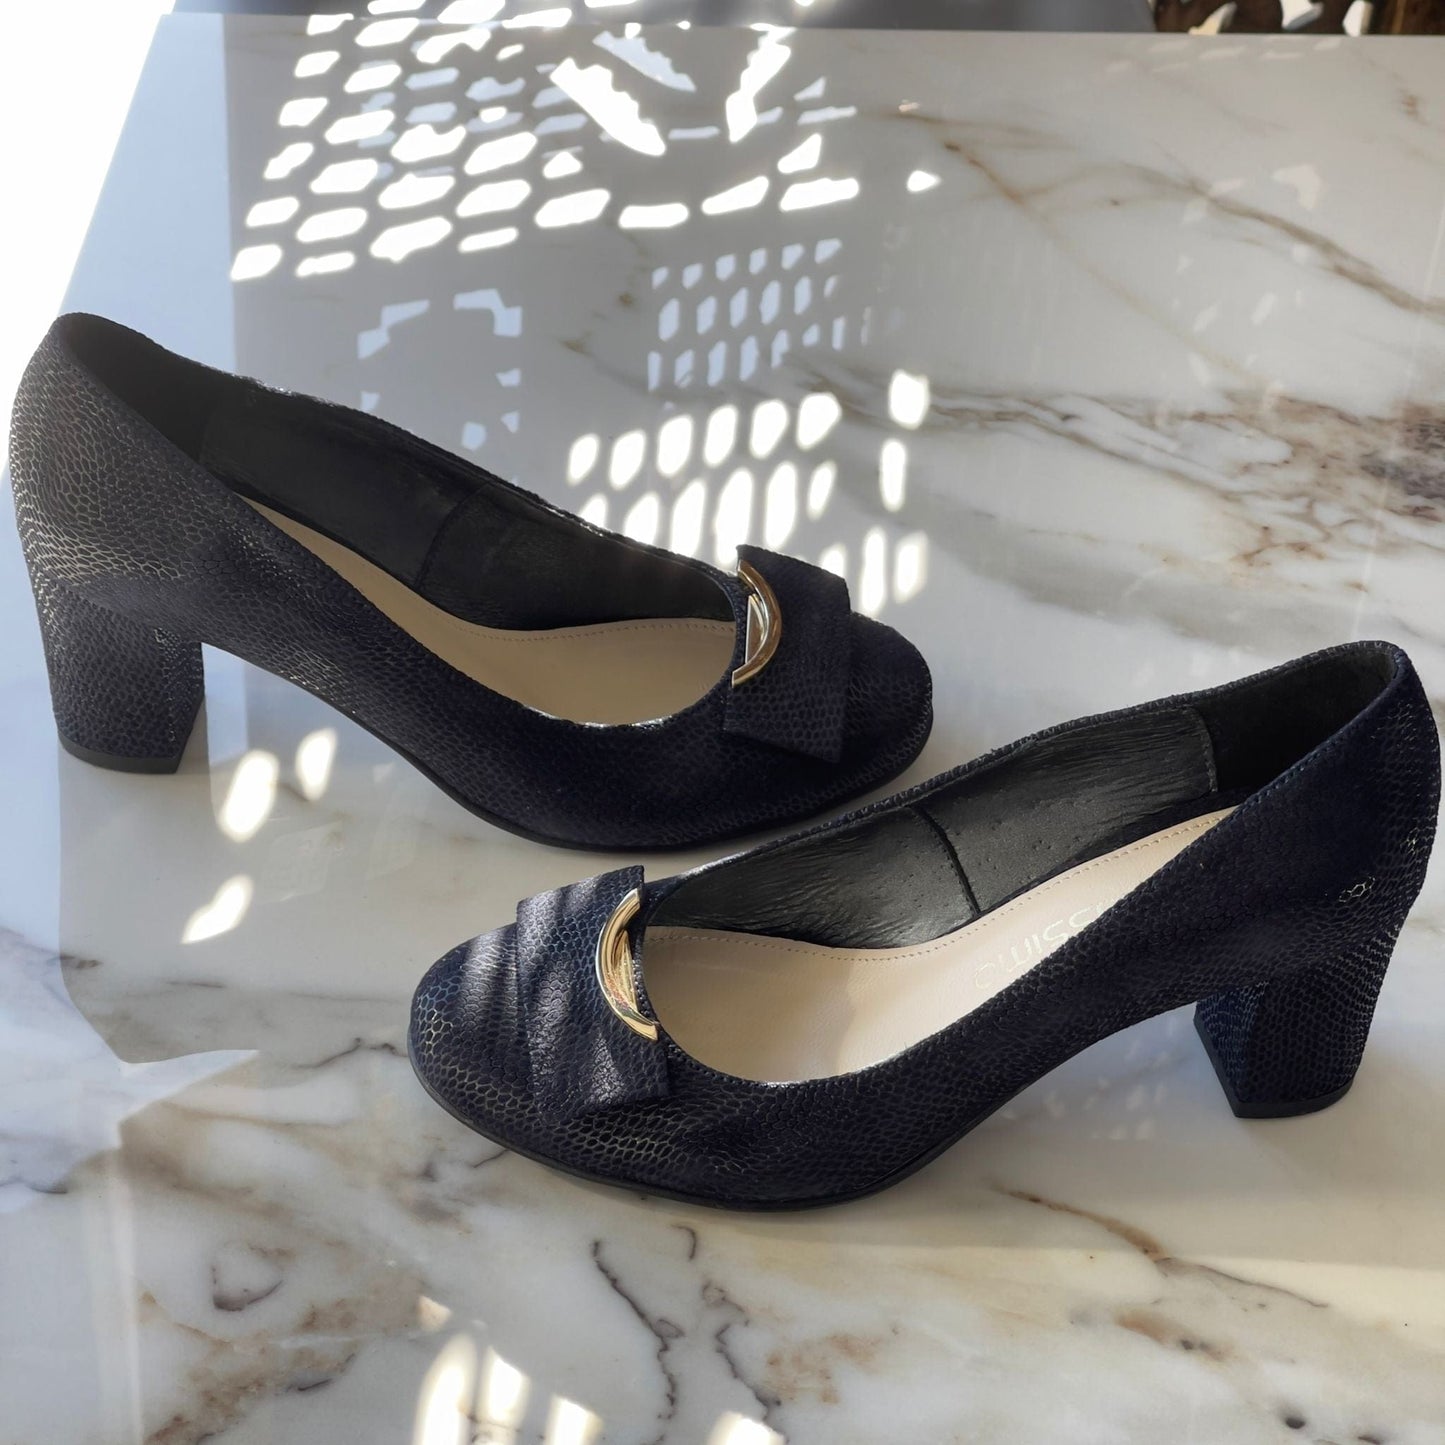 Petite court heels in navy leather